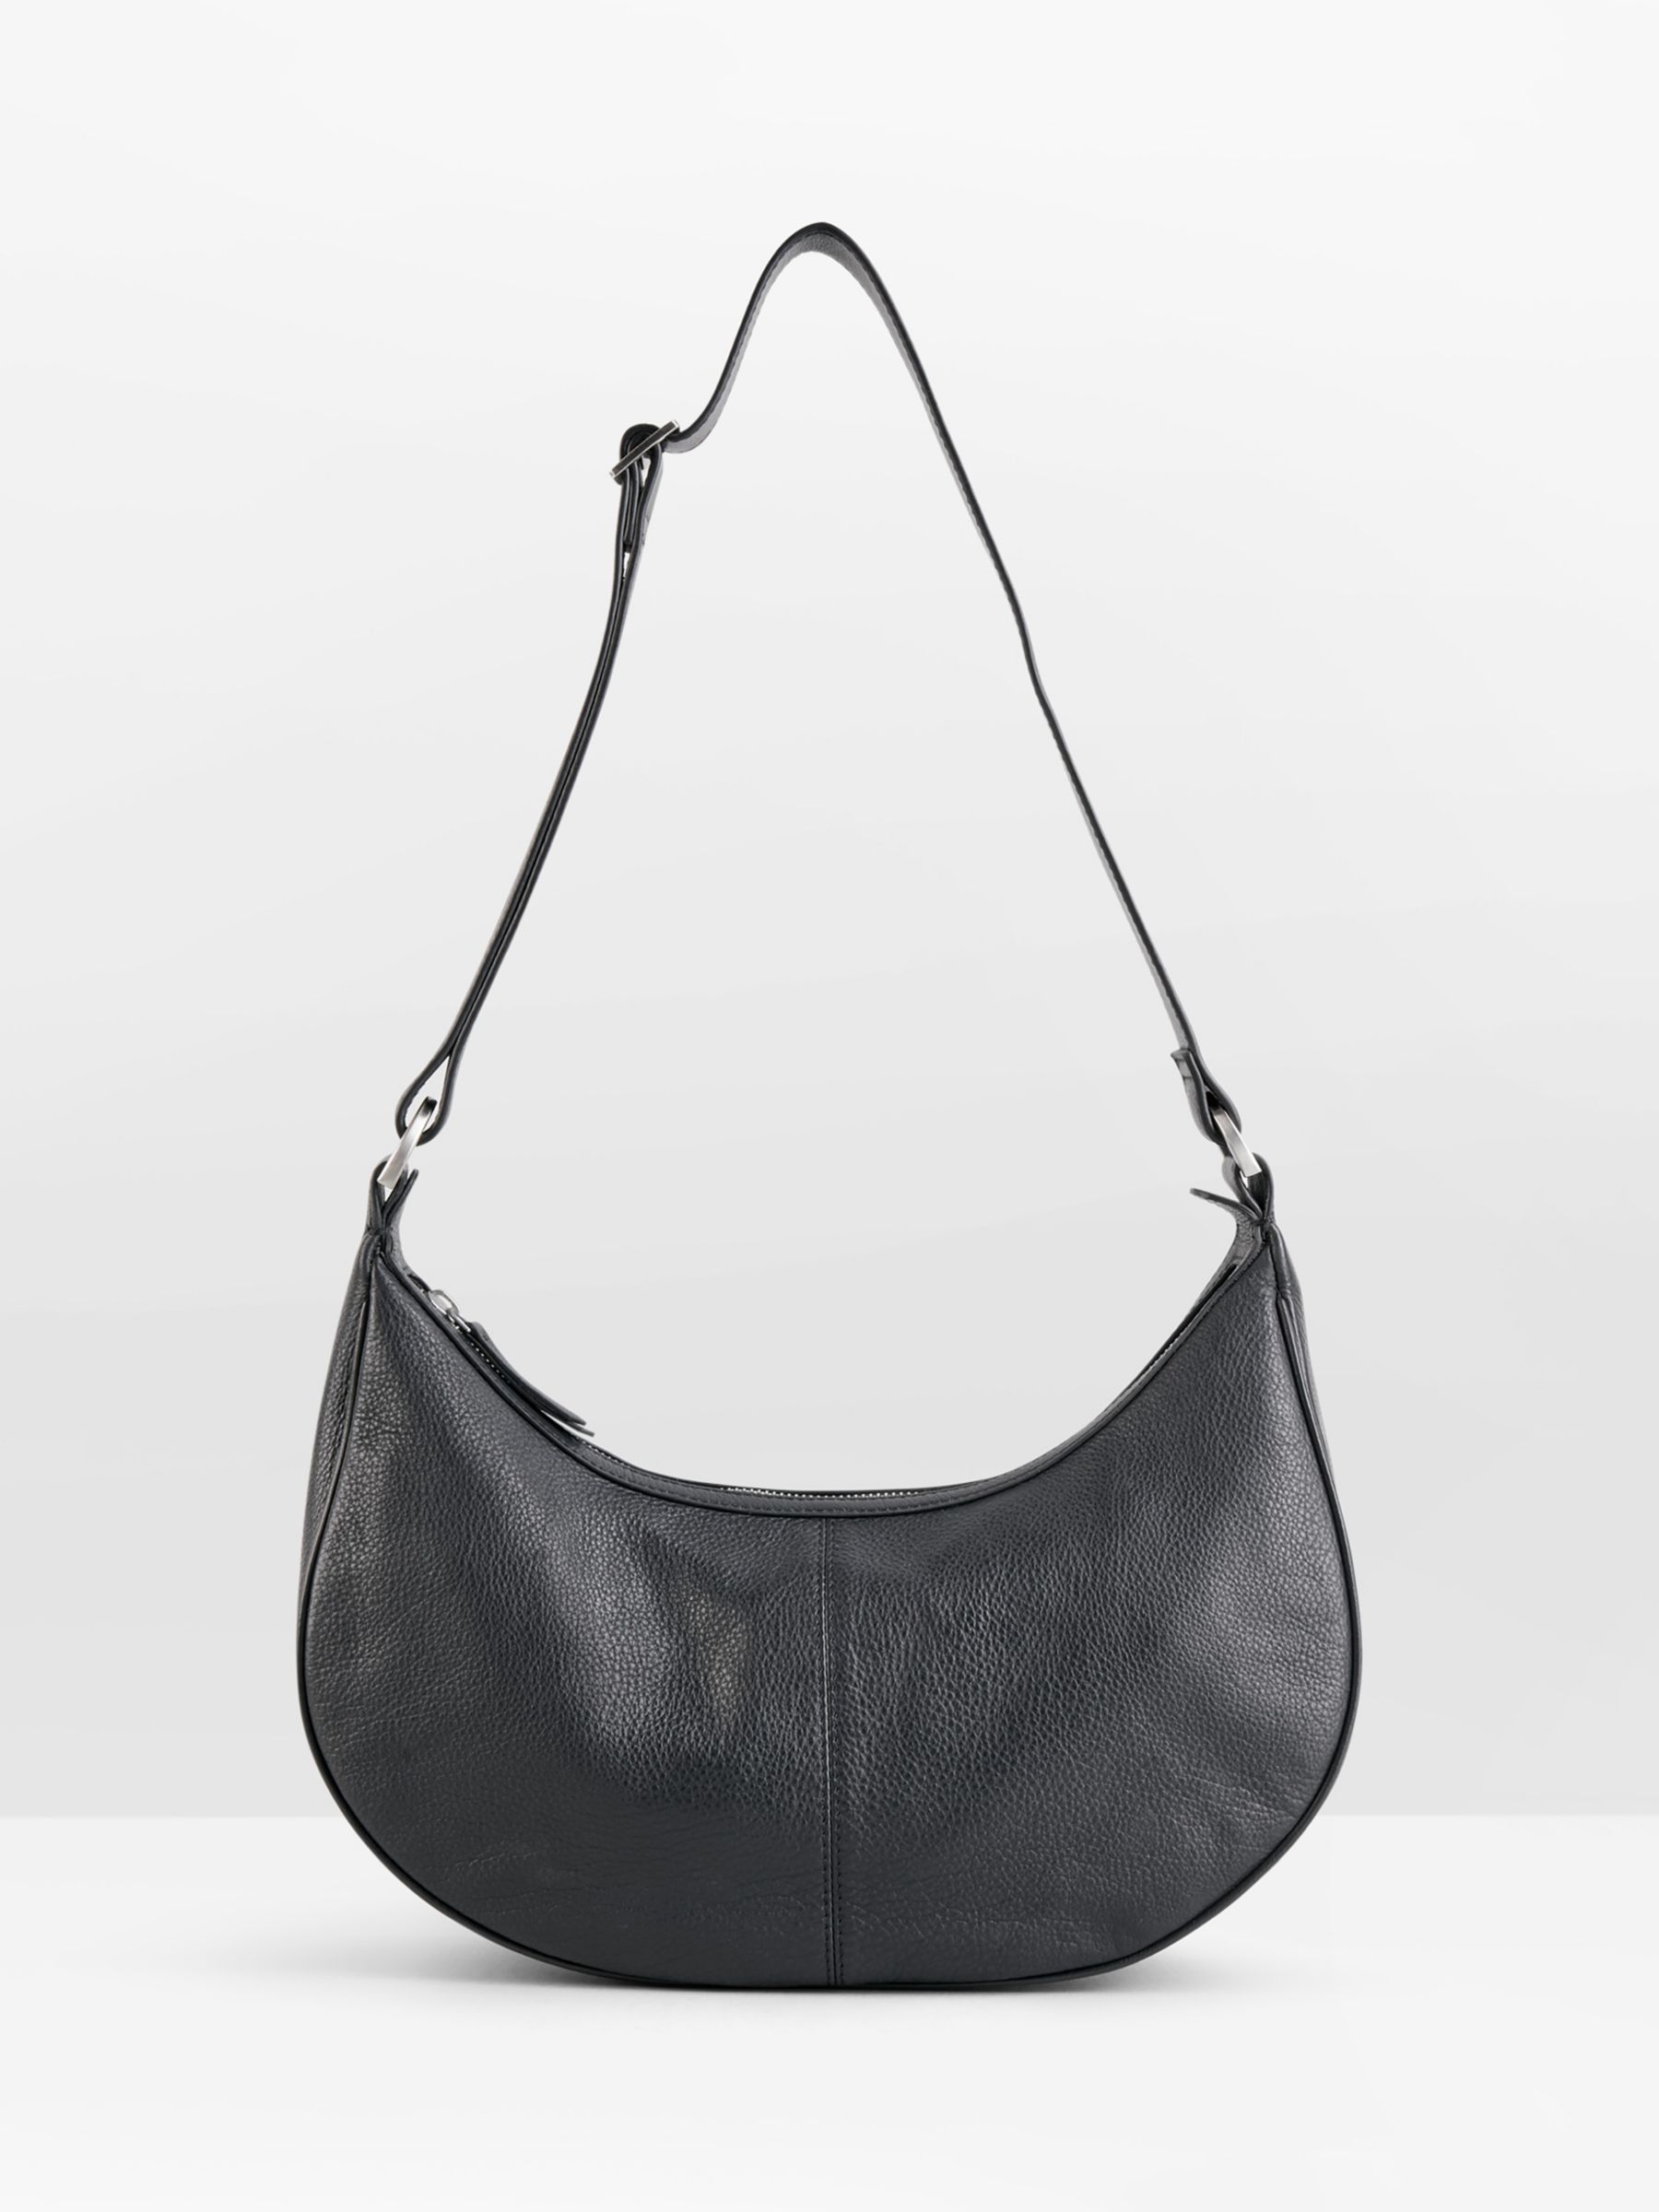 hush Marcia Curved Leather Handbag, Black at John Lewis & Partners